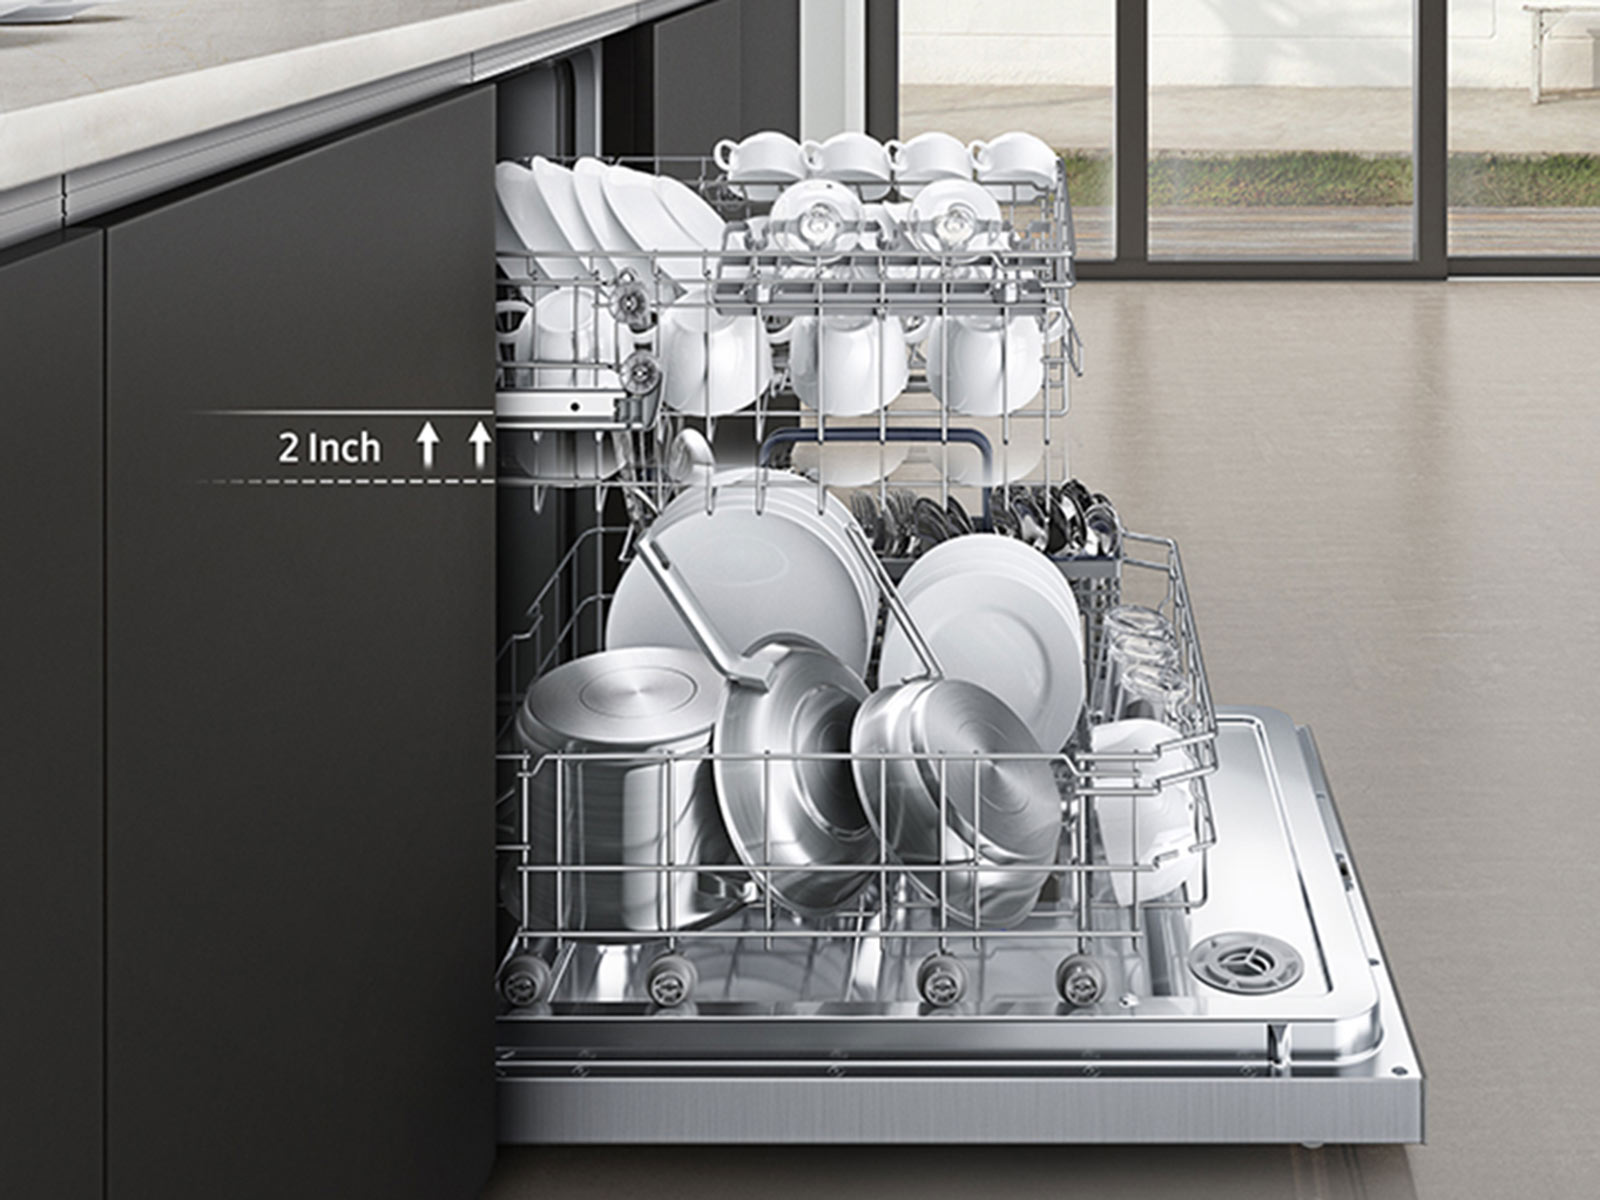 https://image-us.samsung.com/SamsungUS/home/home-appliances/dishwashers/rotary/pdp/dw80m2020us-aa/gallery/12-12-17/03_Dishwasher_DW80M2020US_Lifestyle_Kitchen_Adjustable_Racks.jpg?$product-details-jpg$